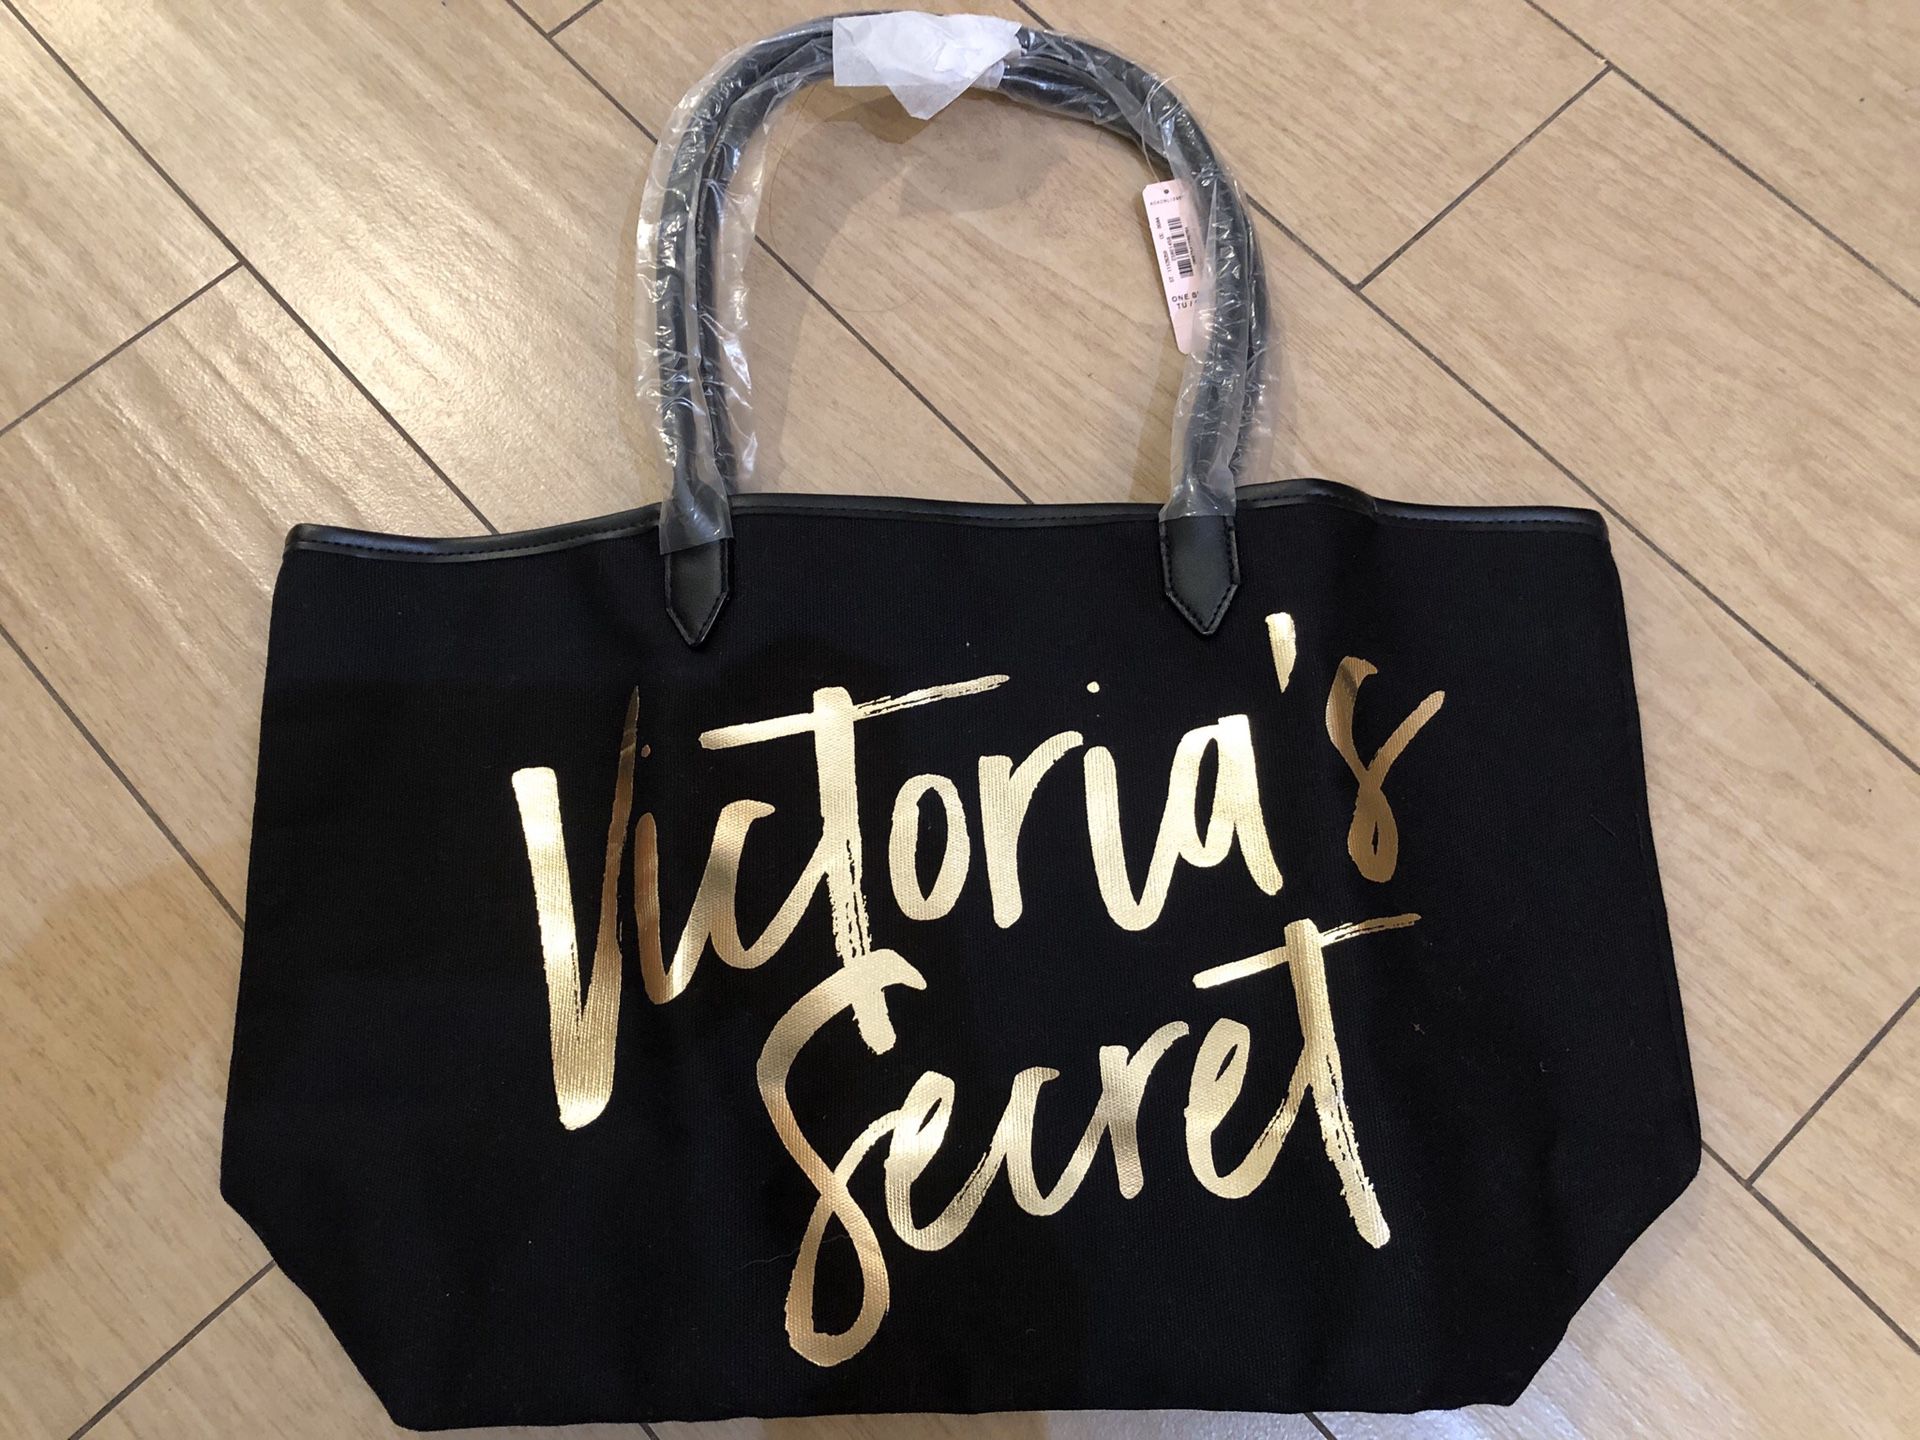 Victoria’s Secret bags